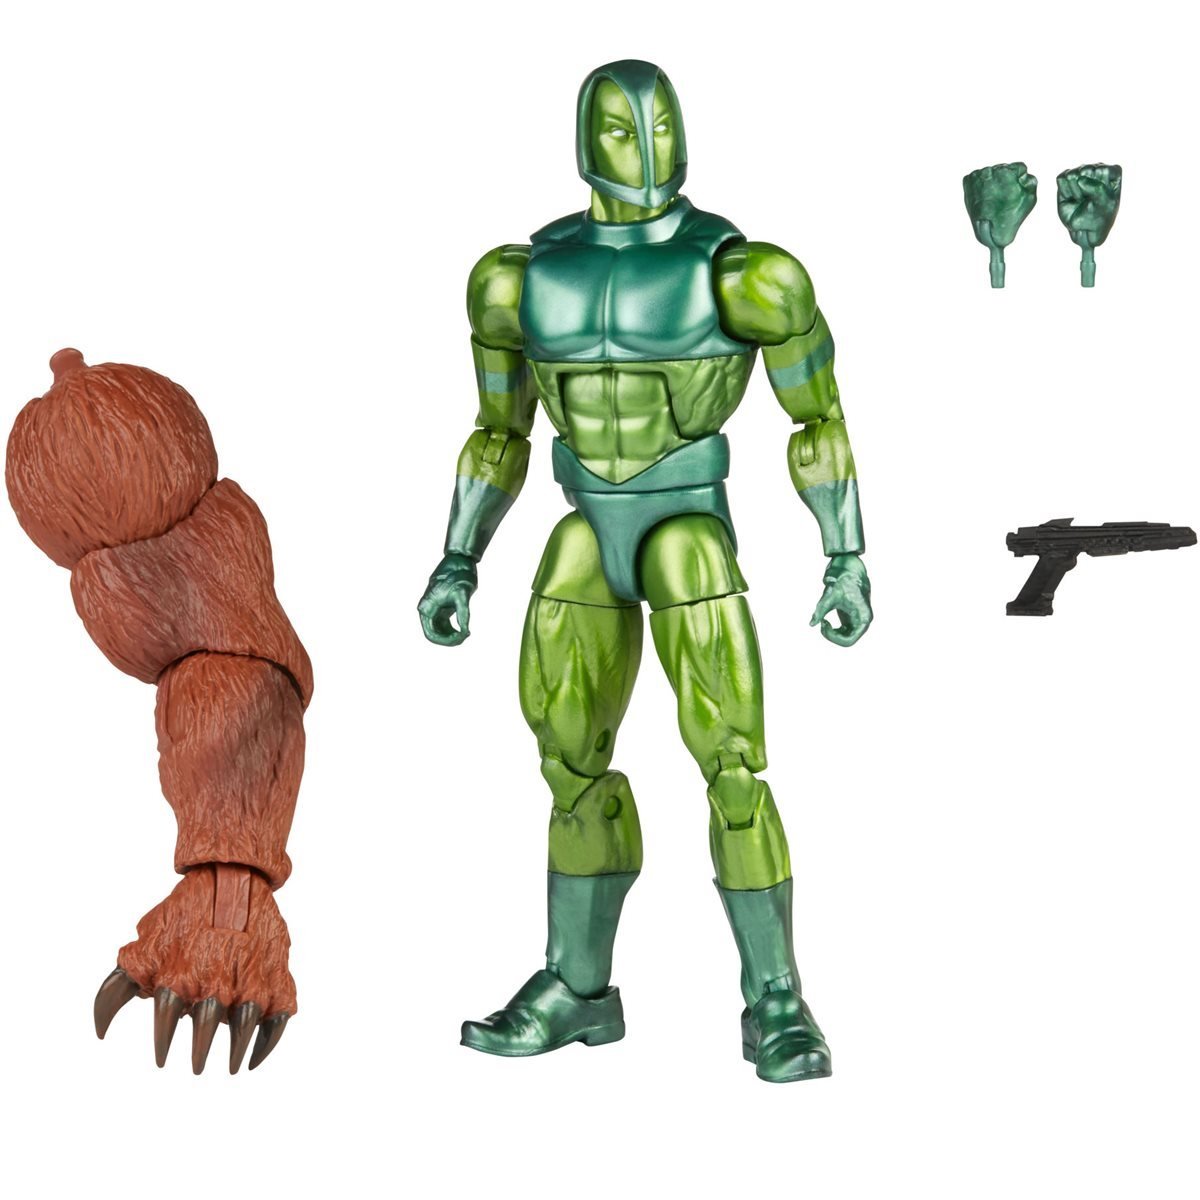 Marvel Legends Ursa Major build a figure wave Comic Guardsman 6-inch figure and accessories